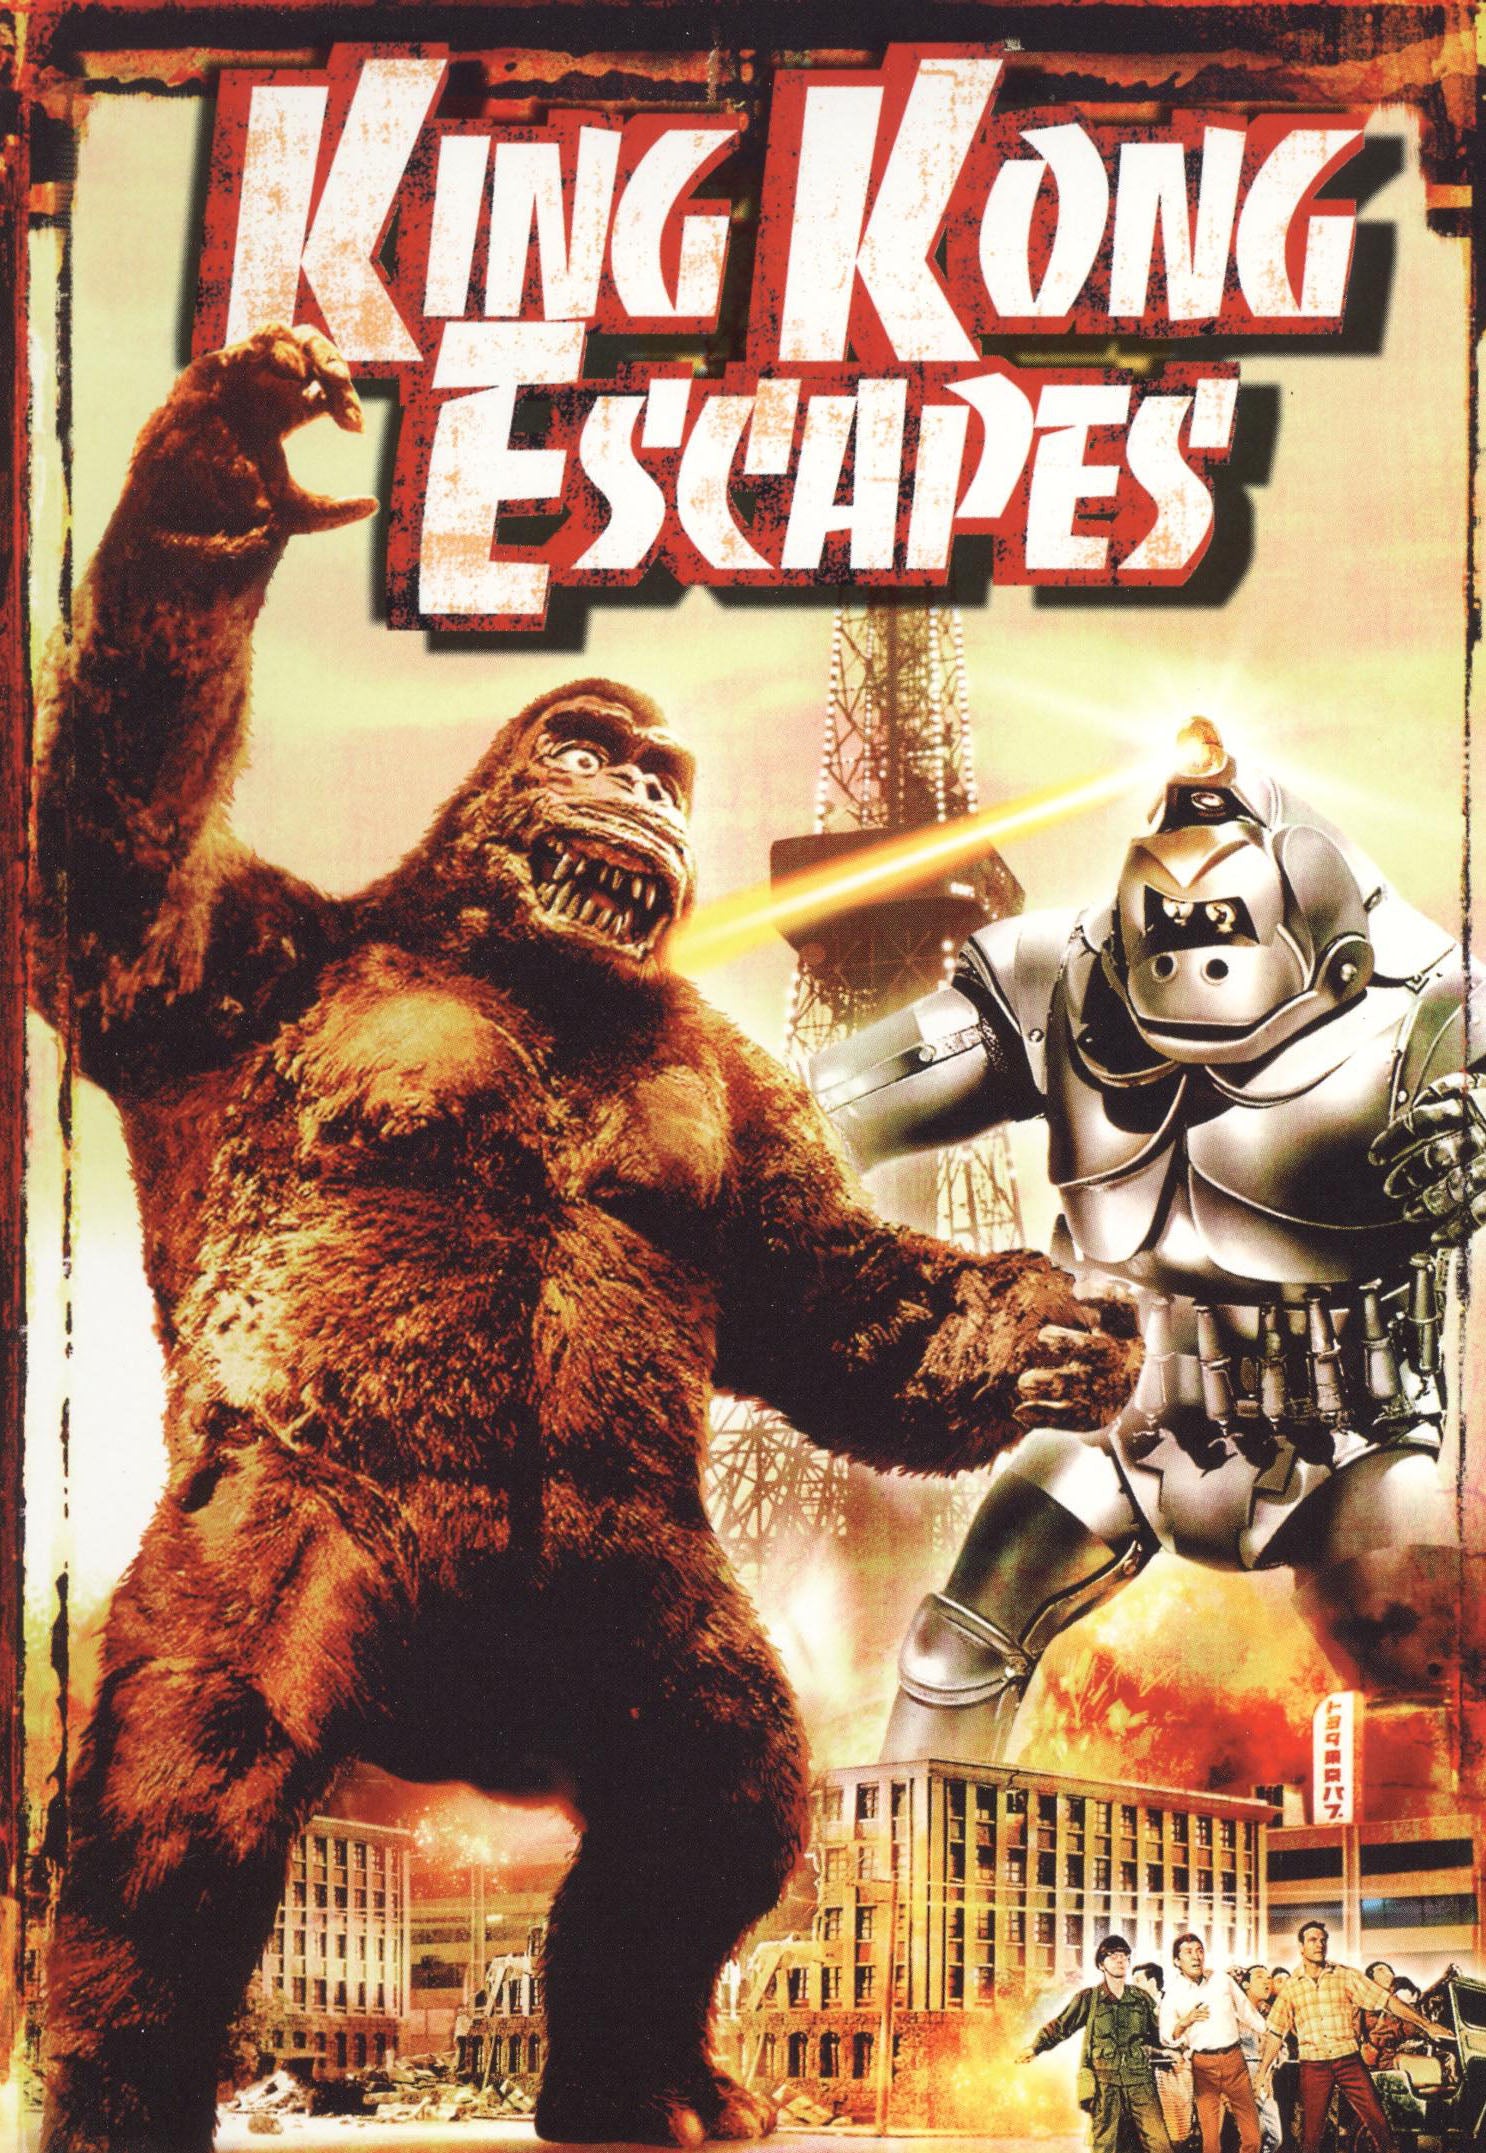 King Kong Escapes cover art